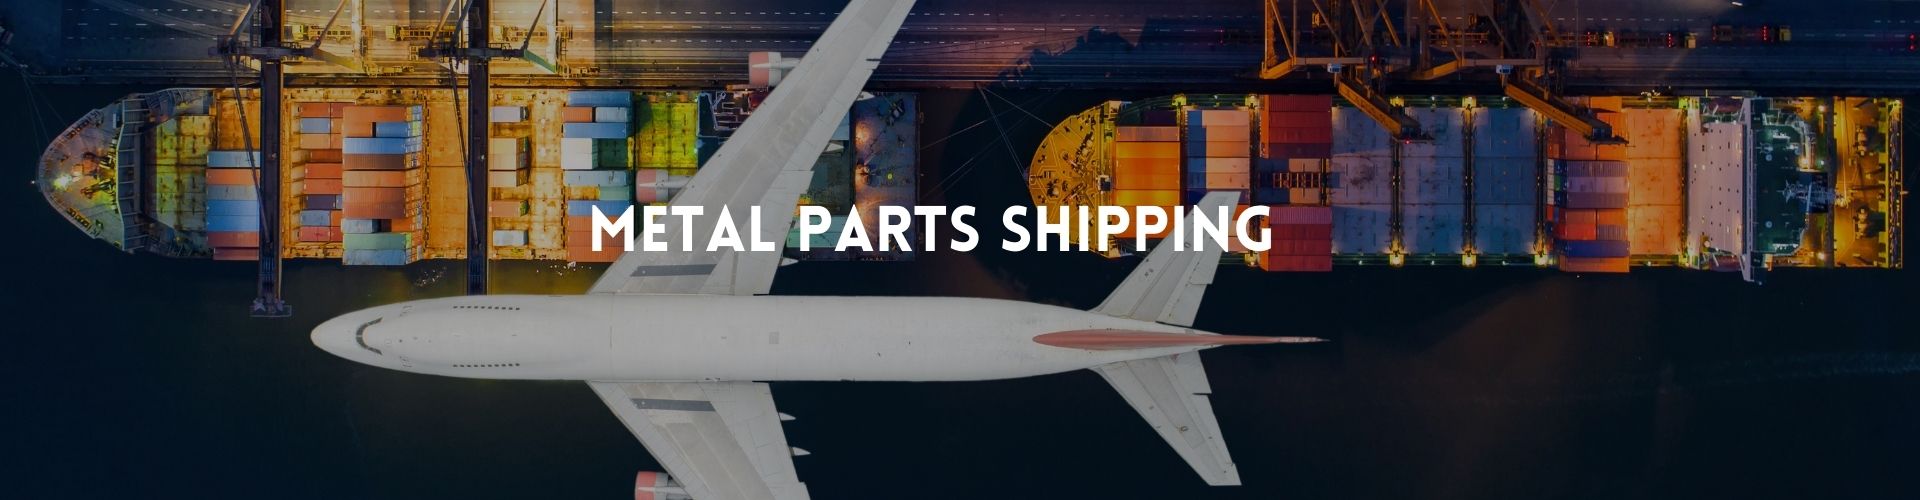 sheet metal parts shipping